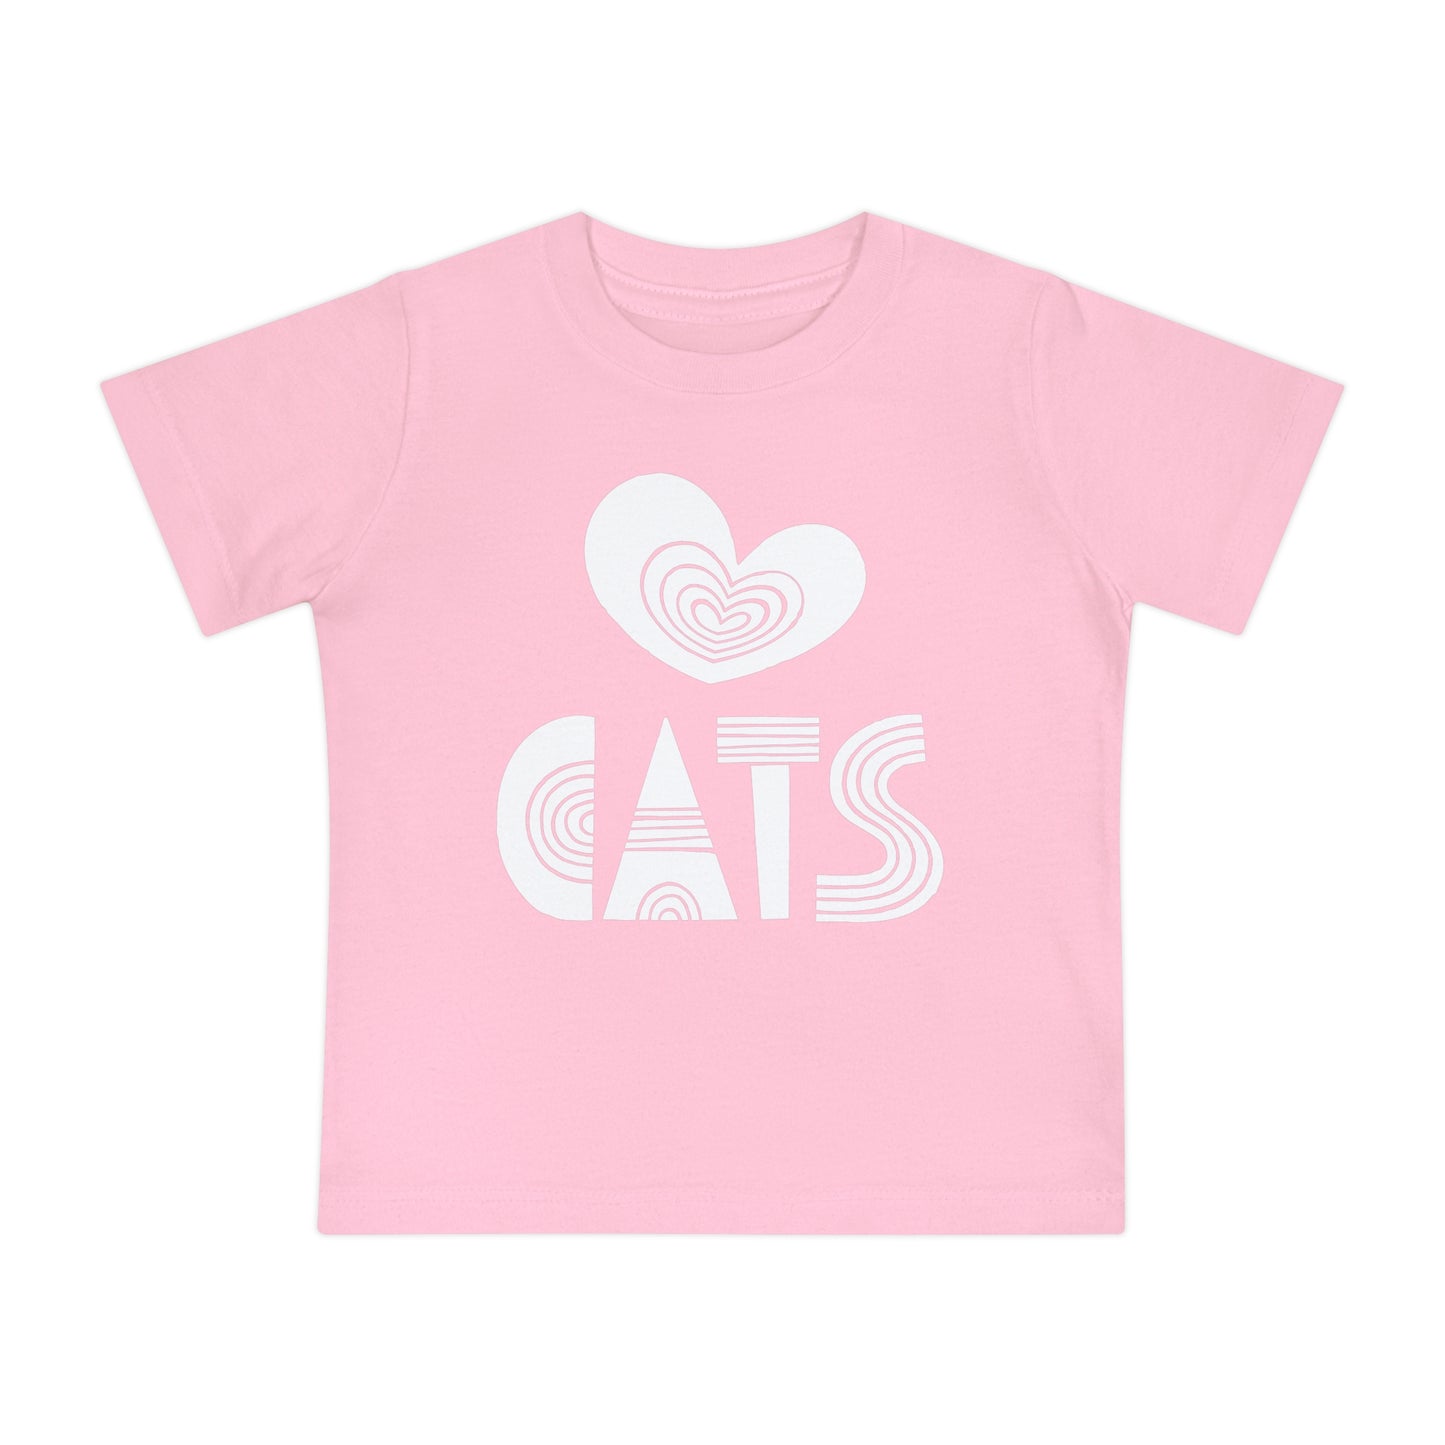 Love Cats Baby Graphic Tee